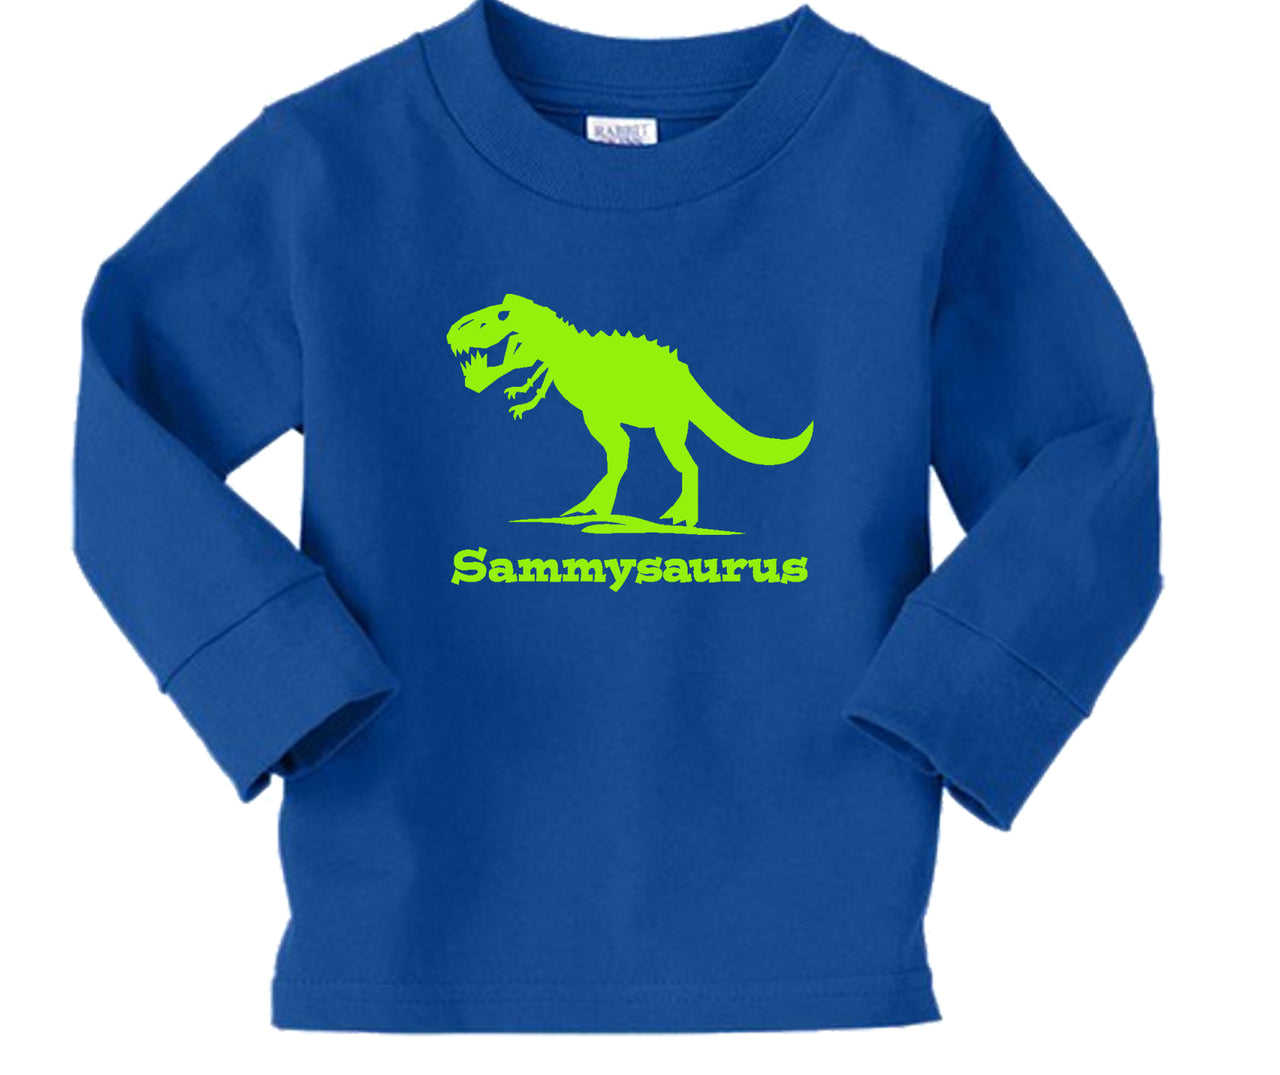 T Rex dinosaur long sleeve shirt